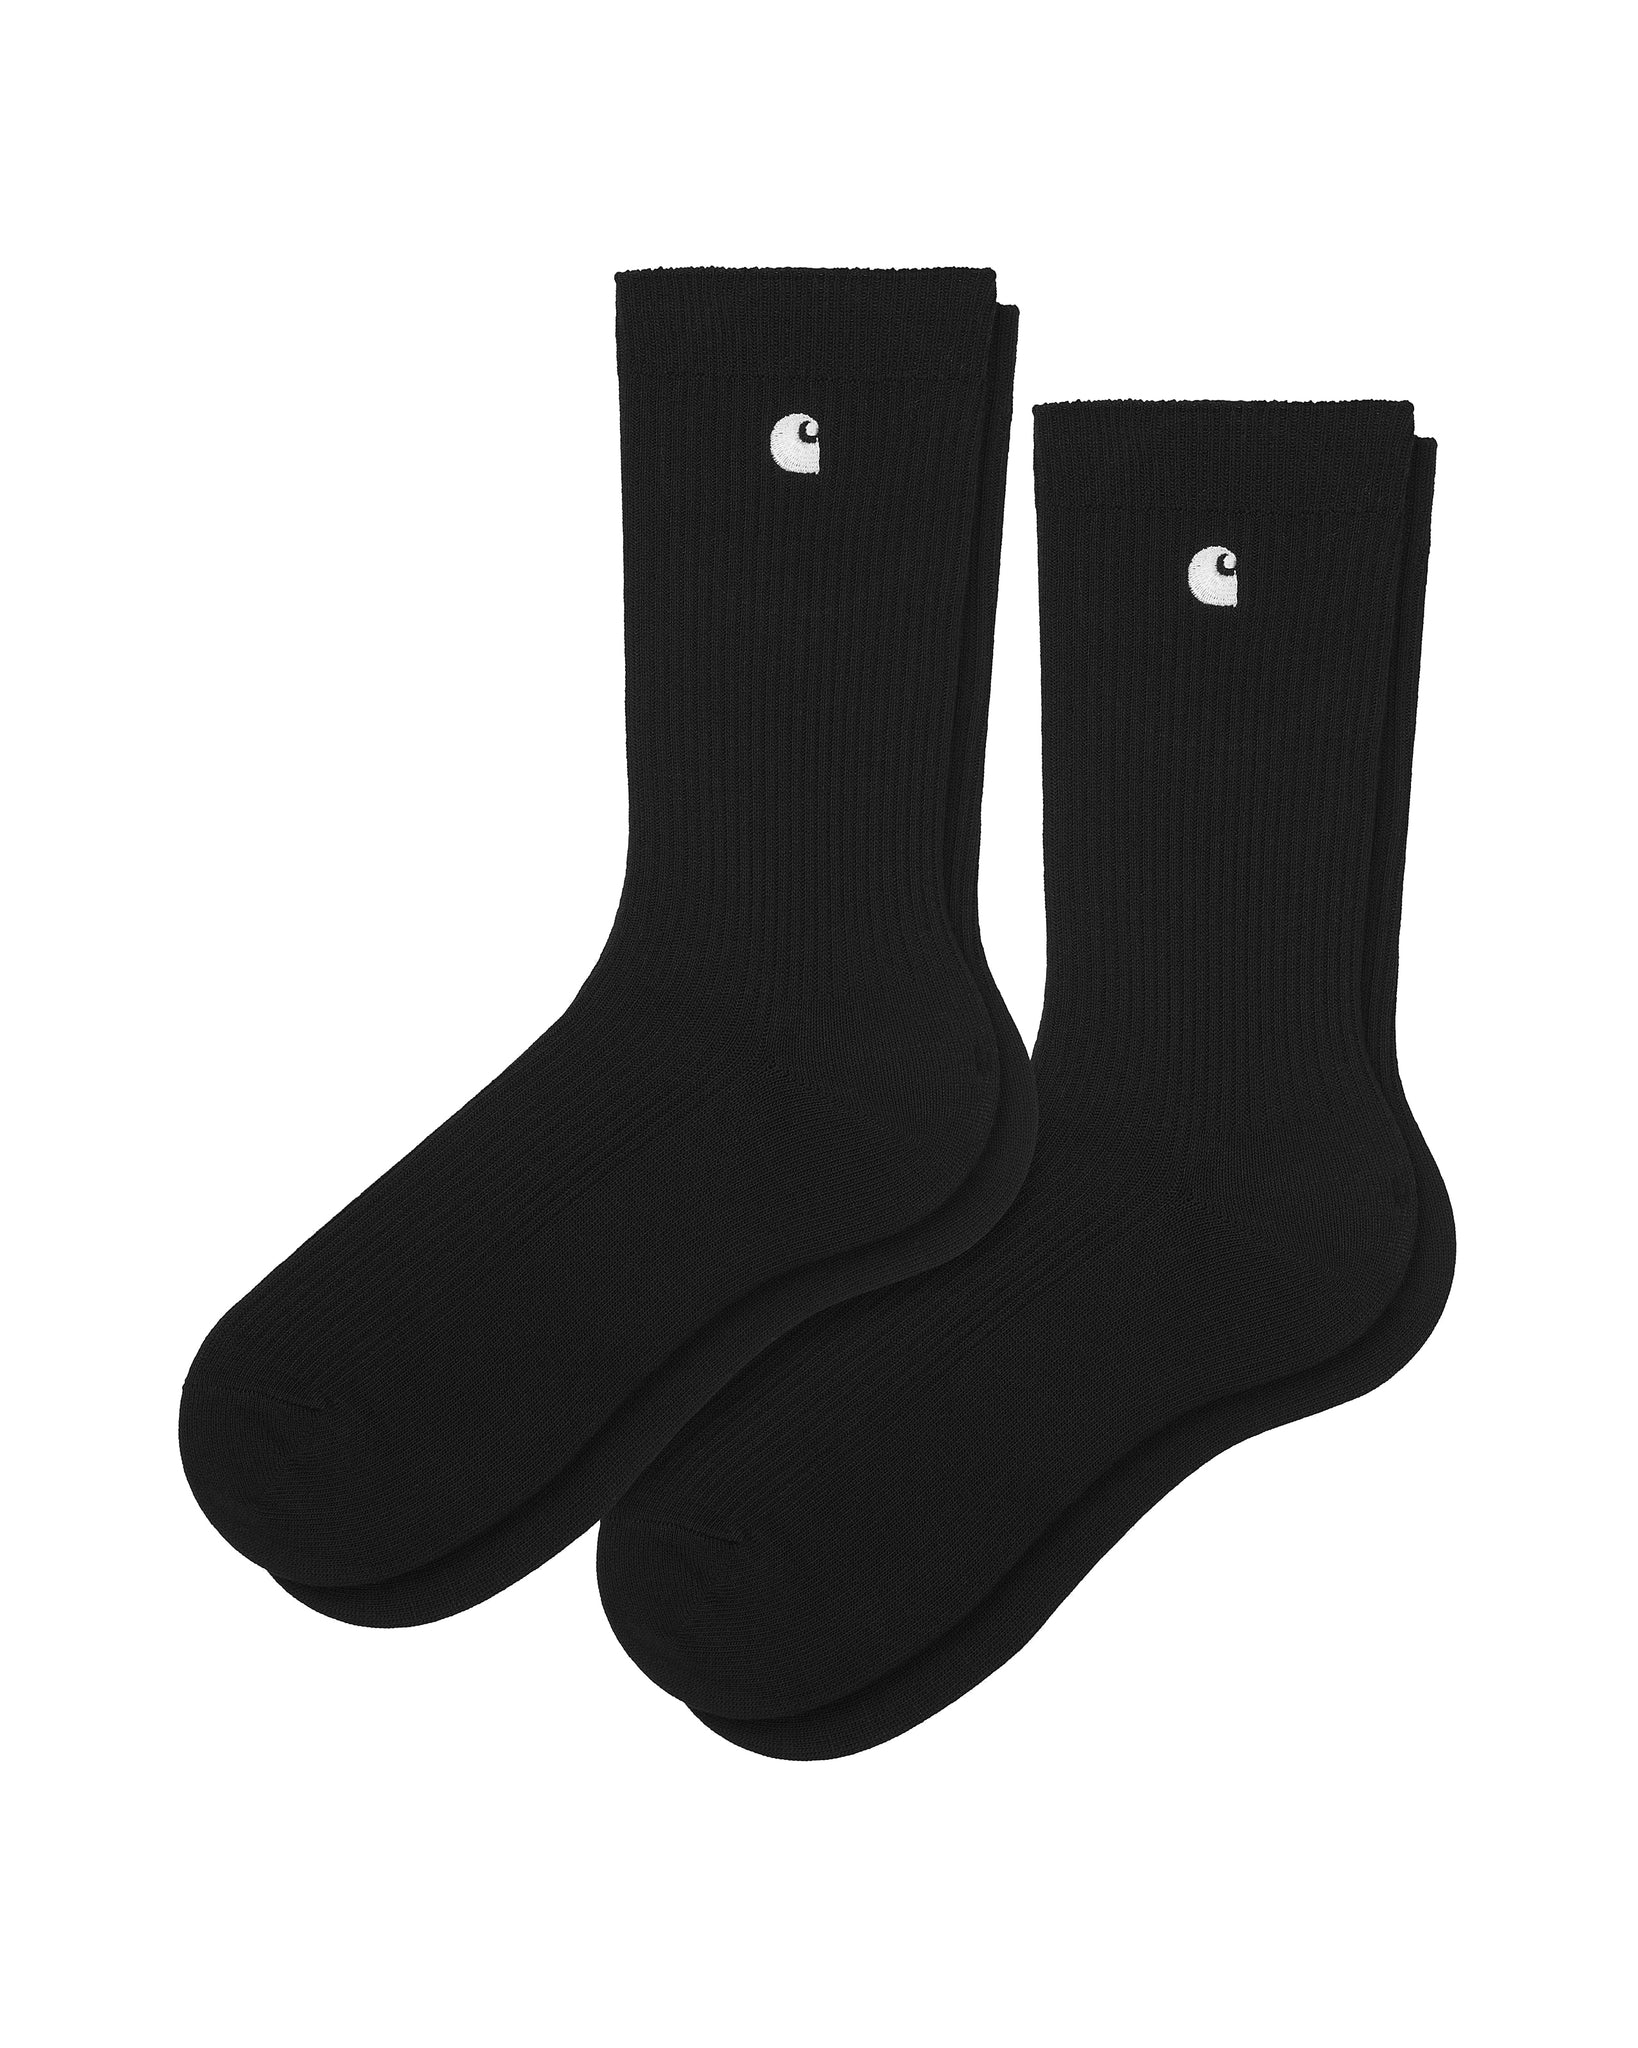 Madison socks (2 pairs Pack) - Black/White